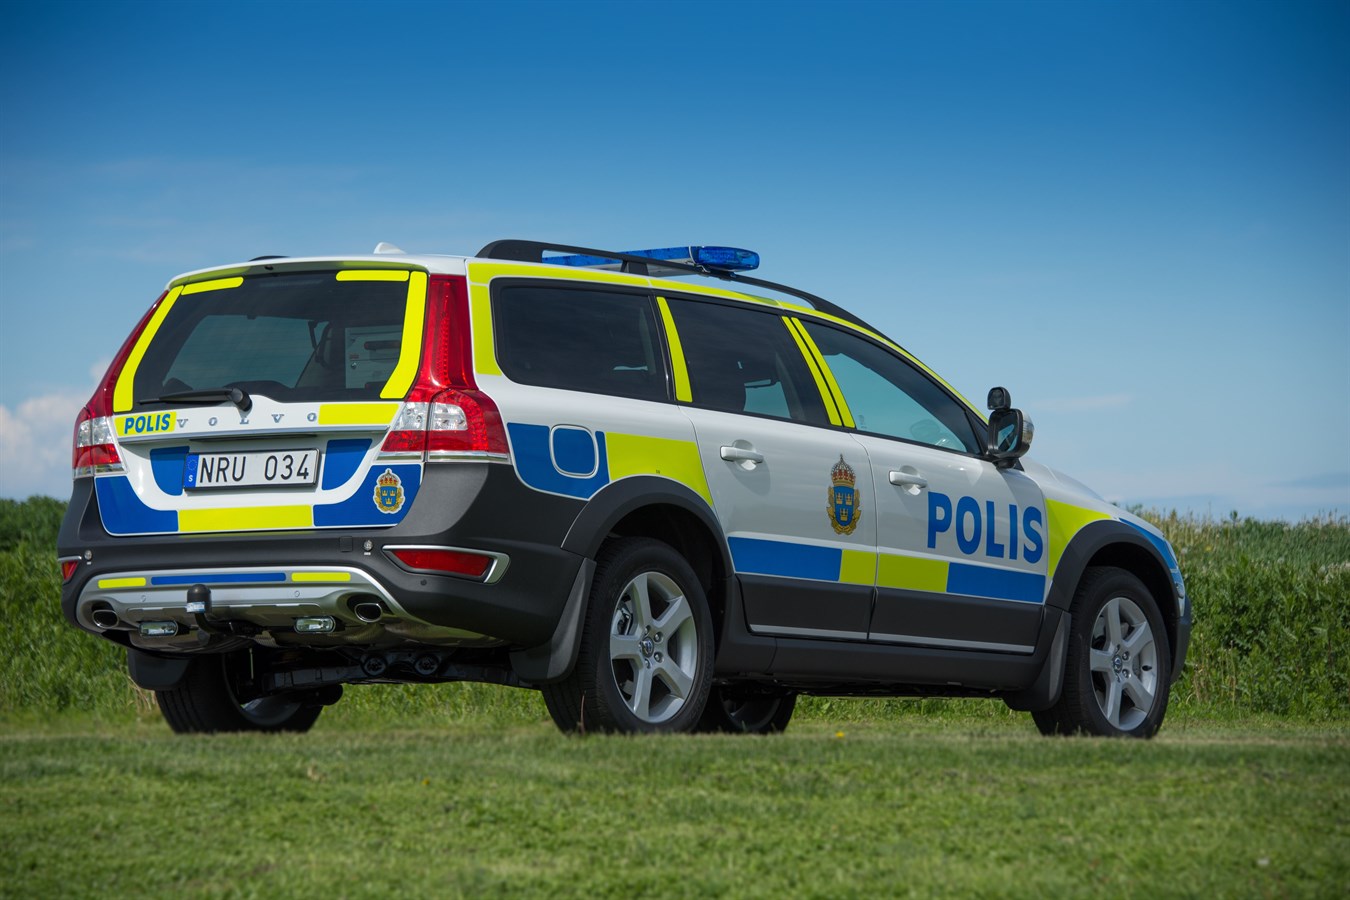 Model year 2014 Volvo XC70 D5 AWD police car (Swedish livery)